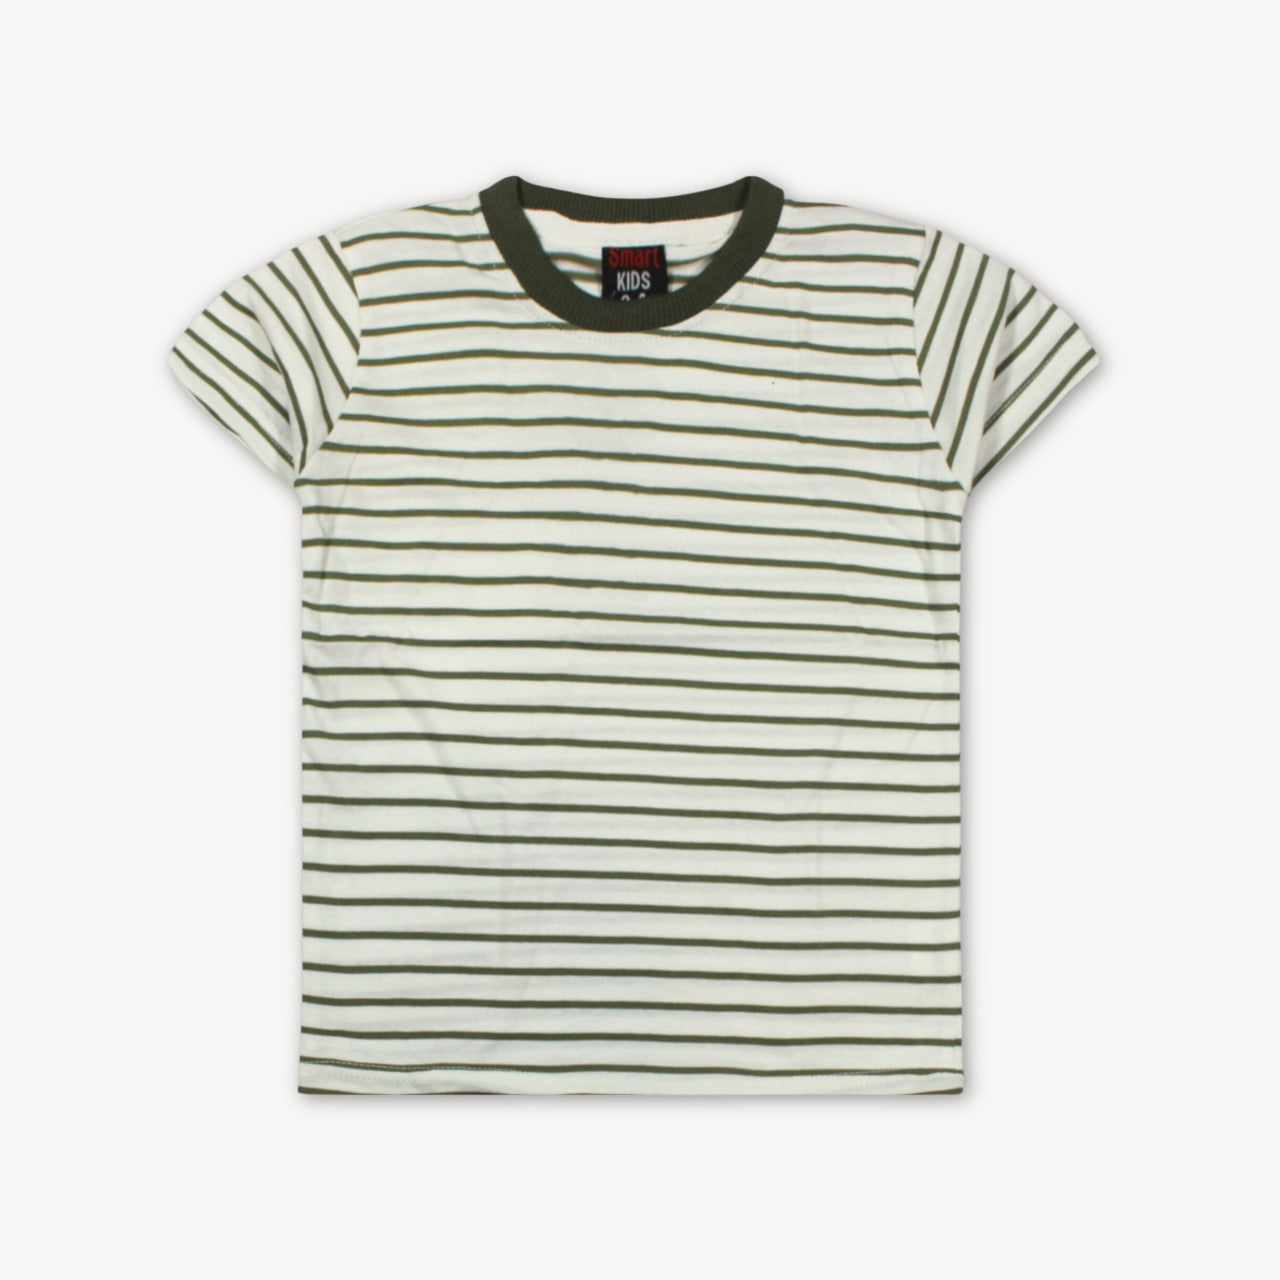 Olive & White Stripe Printed Cotton T-Shirt